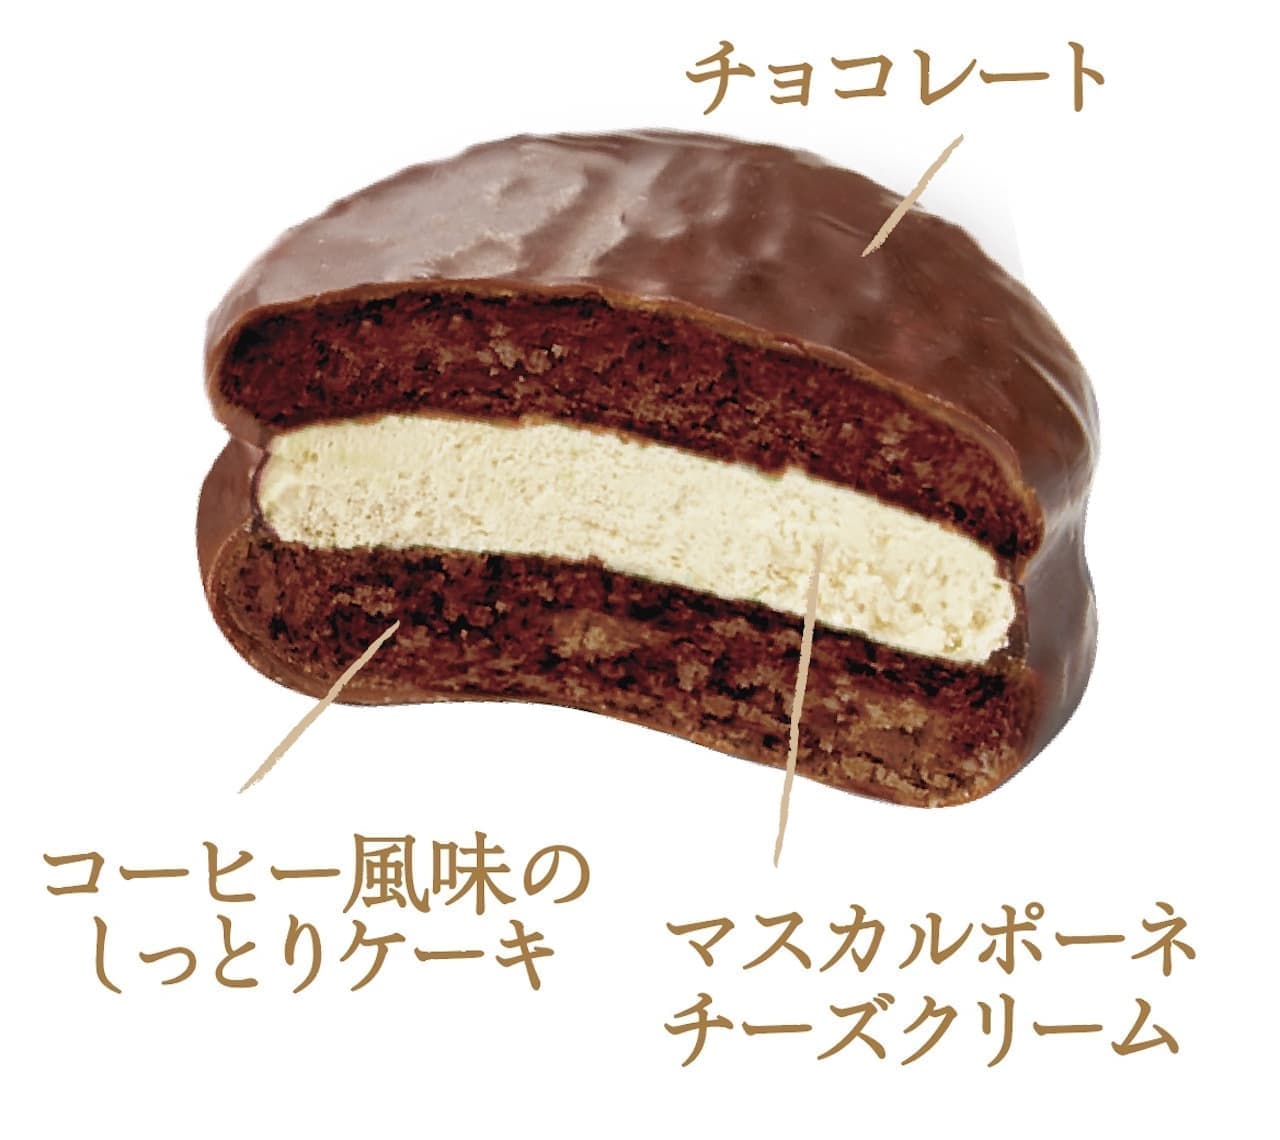 Lotte "Kotorippu Little Choco Pie [Hoshiyama Coffee Shop's Coffee-Scented Cheesecake]".